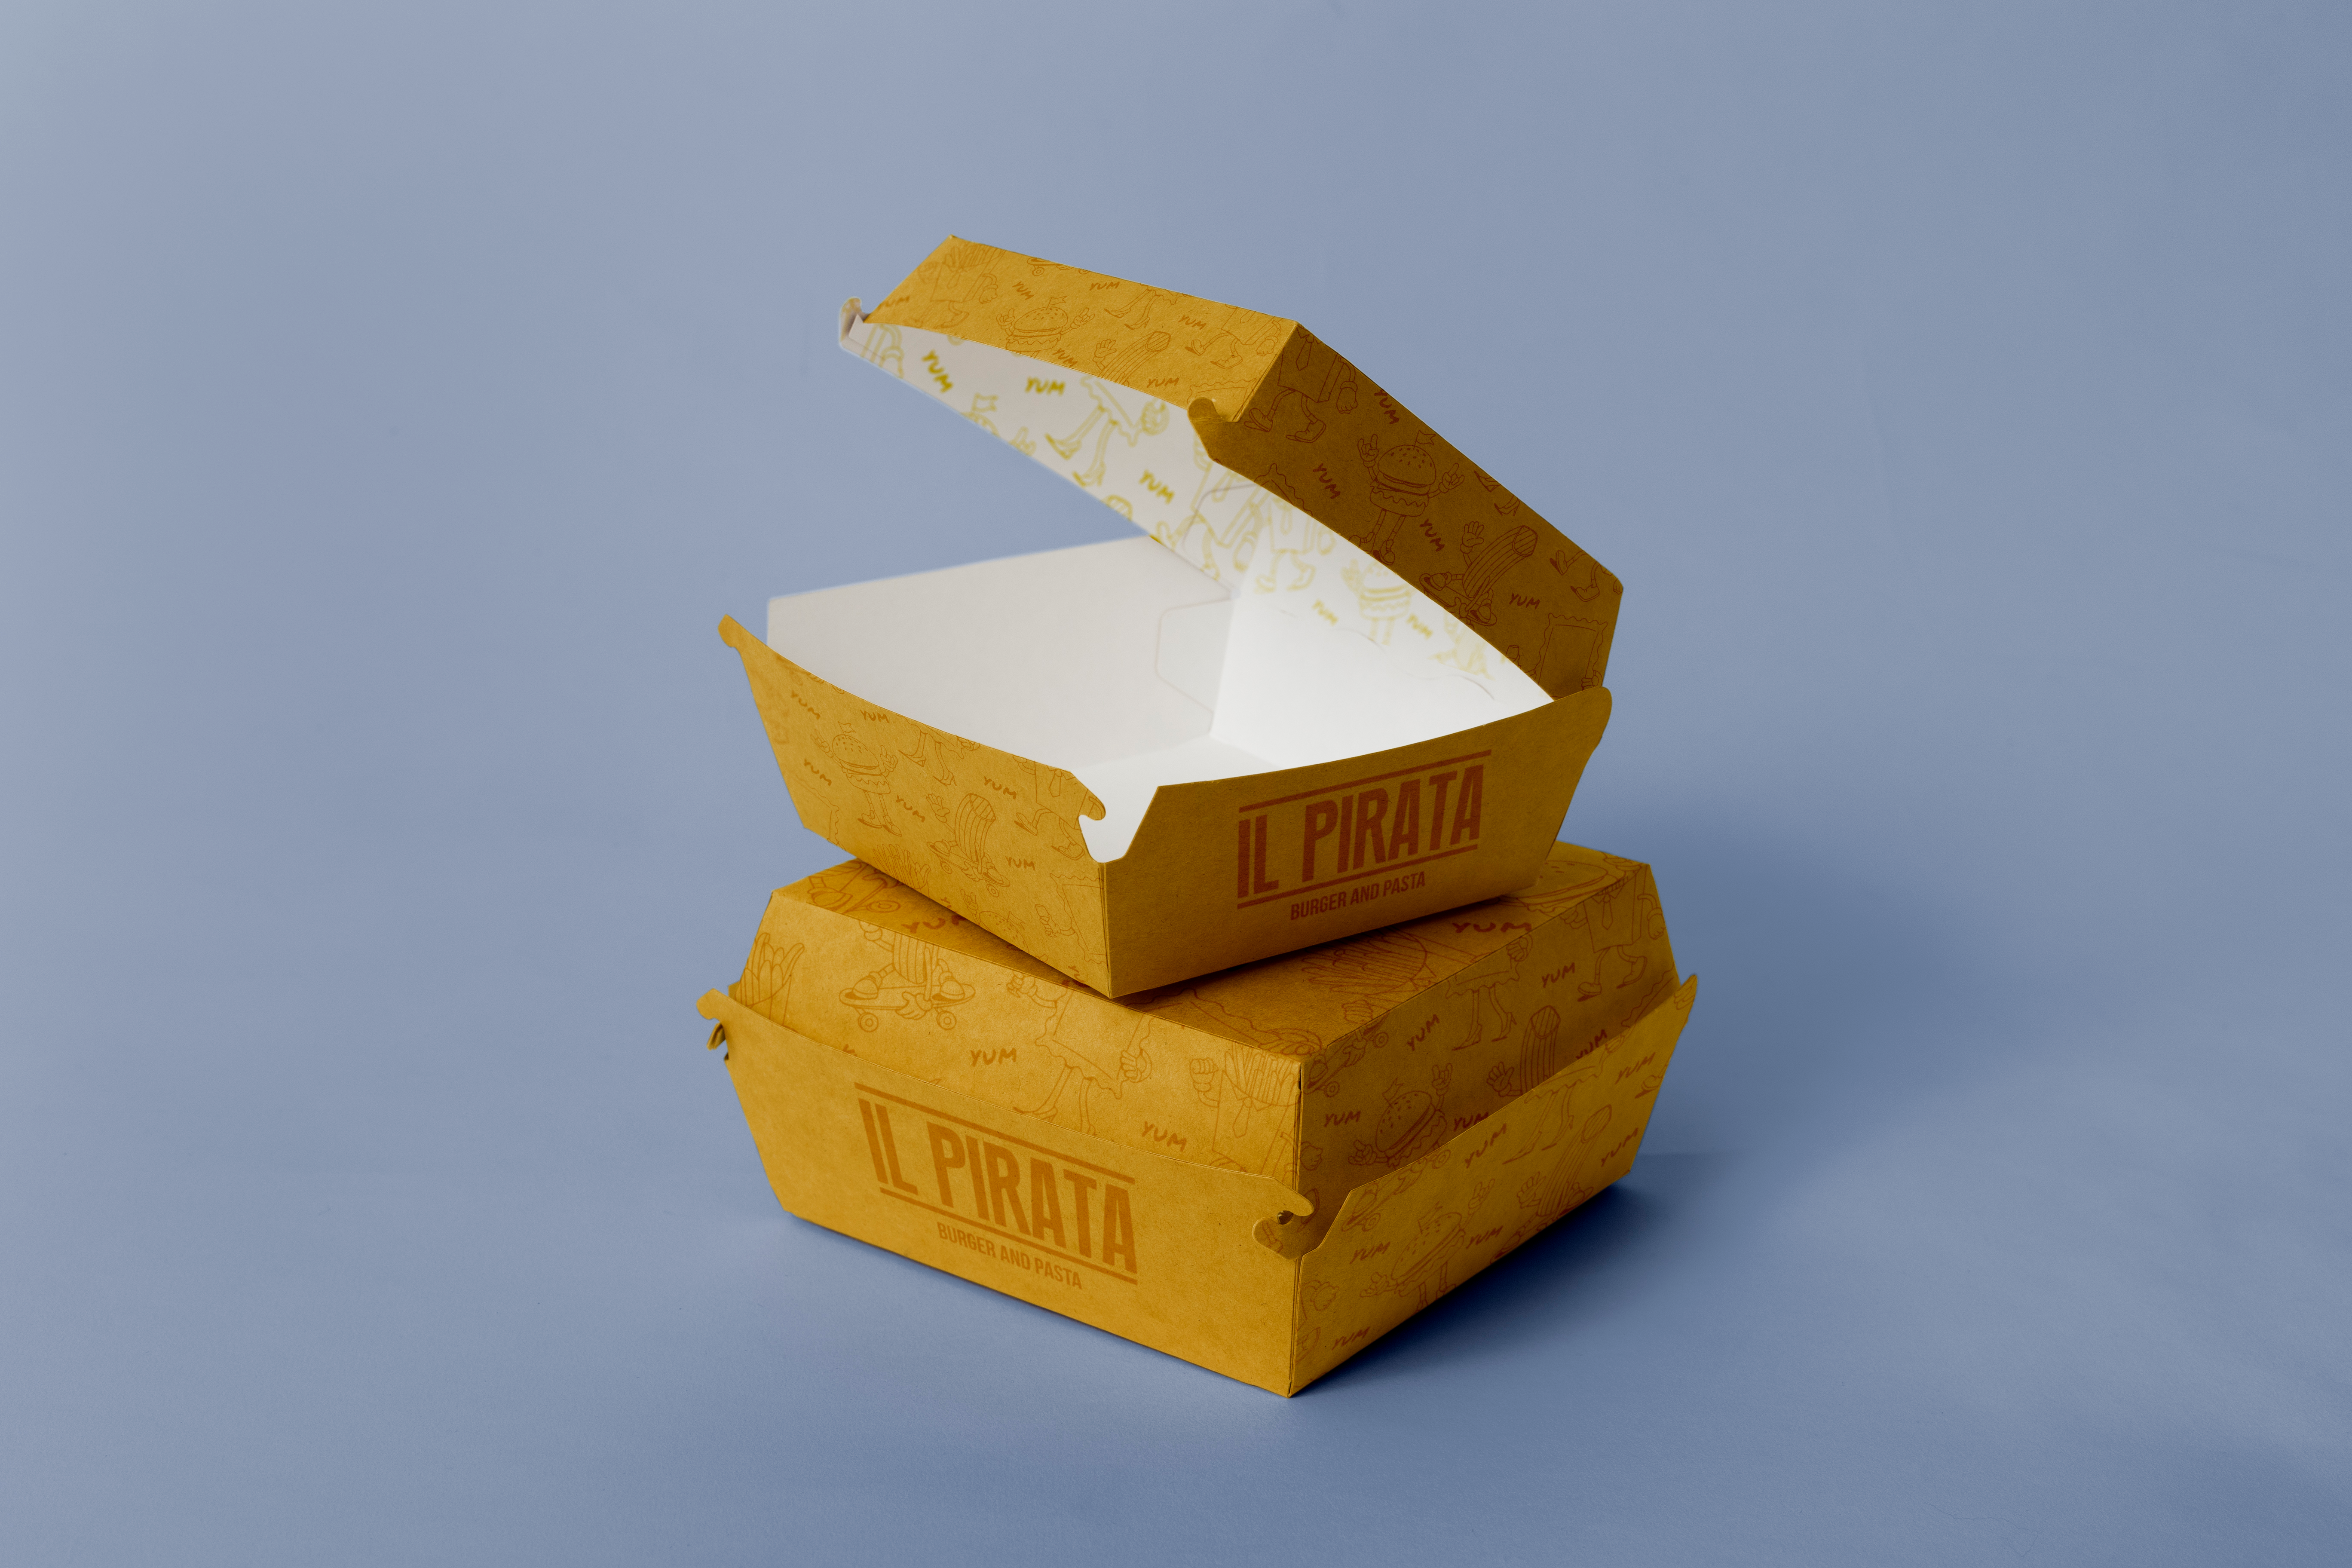 Takeaway boxes with il pirata burger and pasta logo